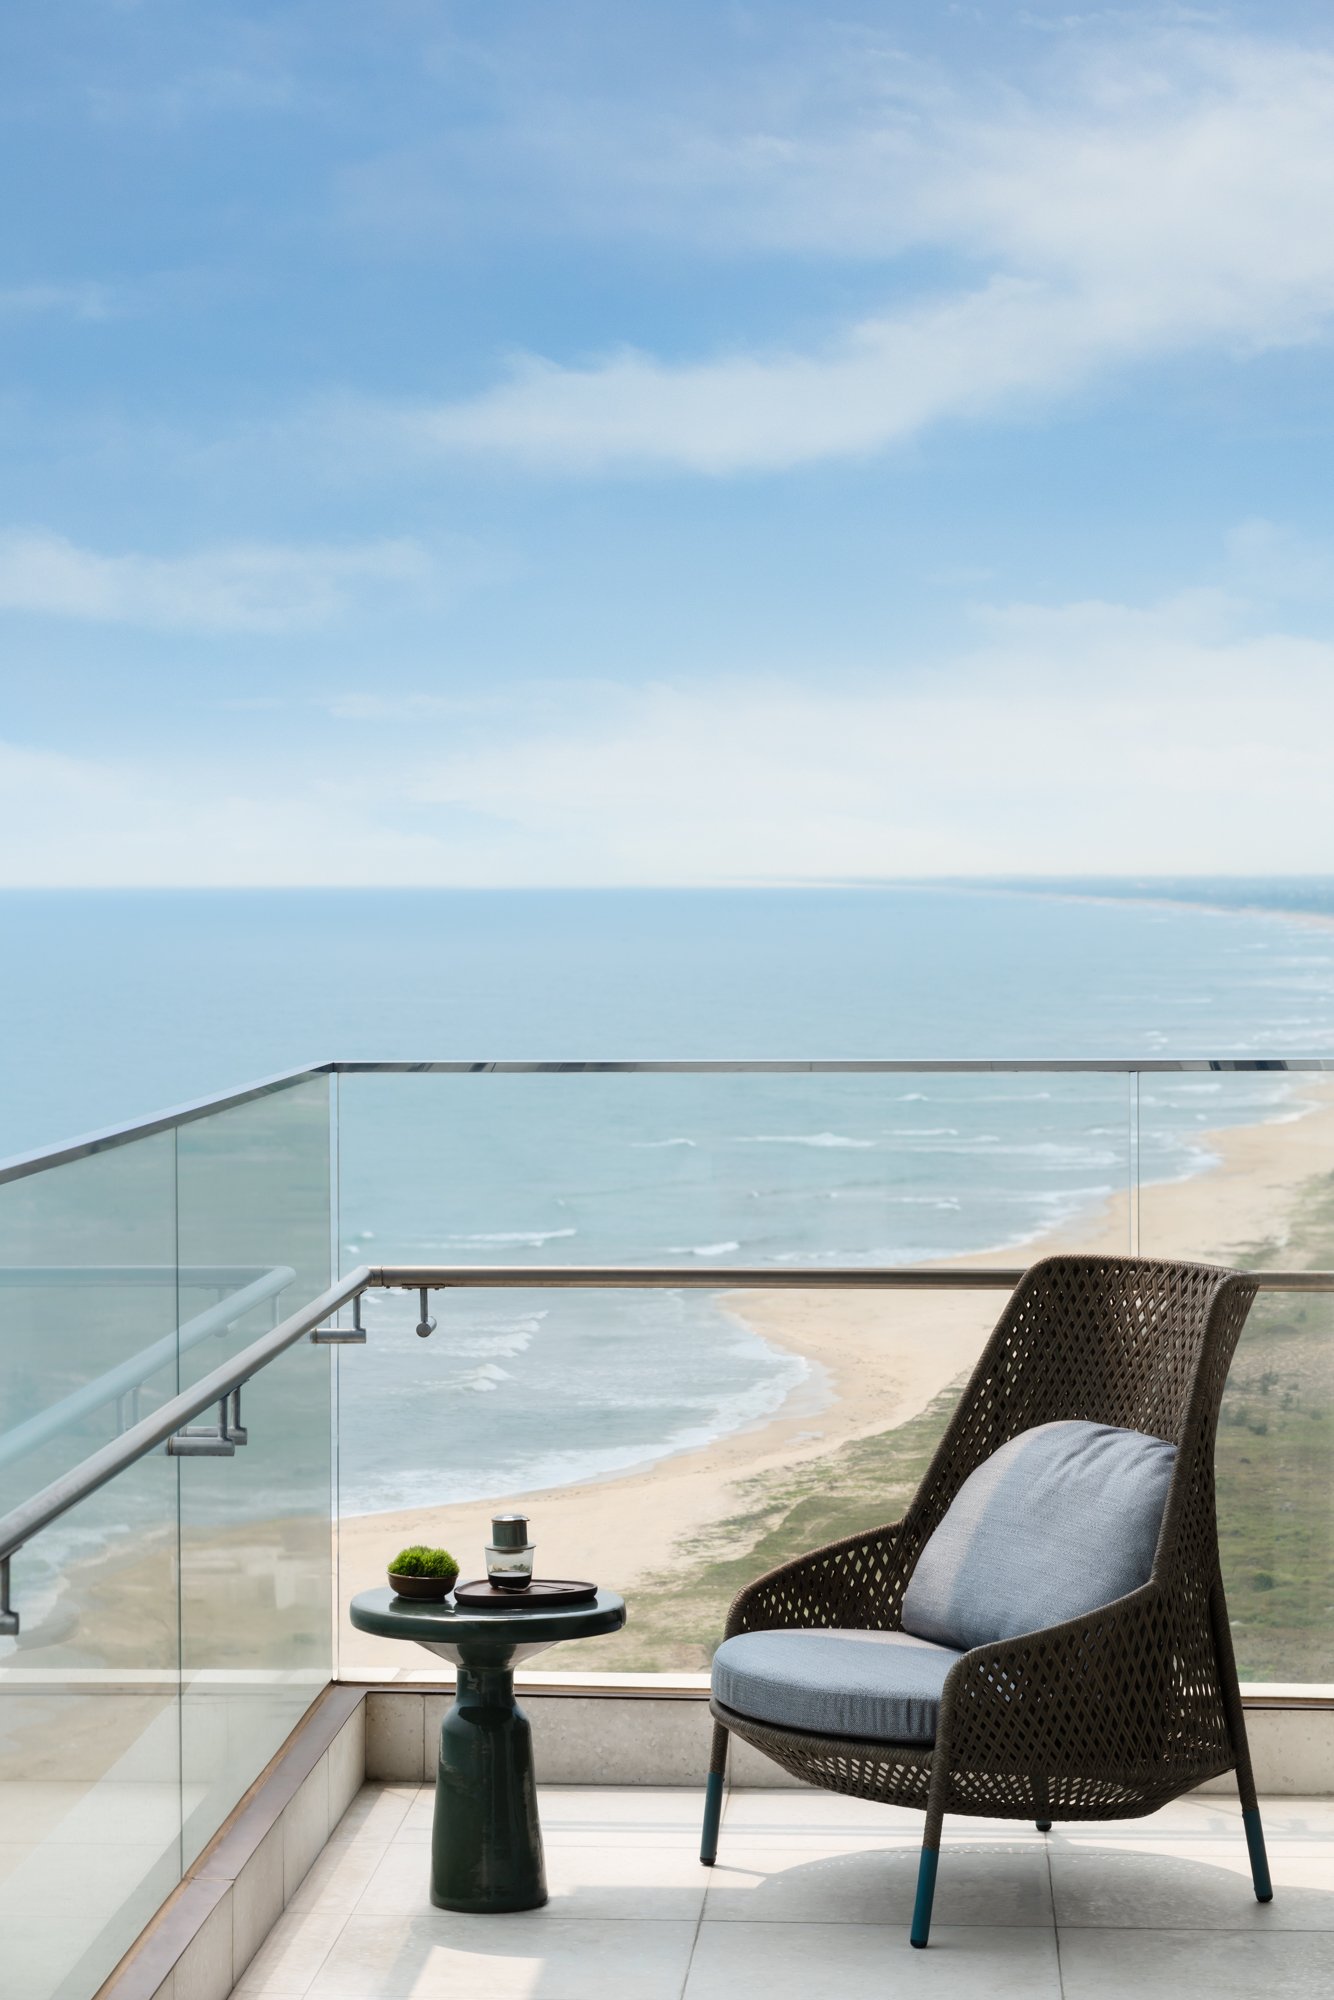  Premier Ocean Suite Balcony at New World Hoiana Beach Resort. 